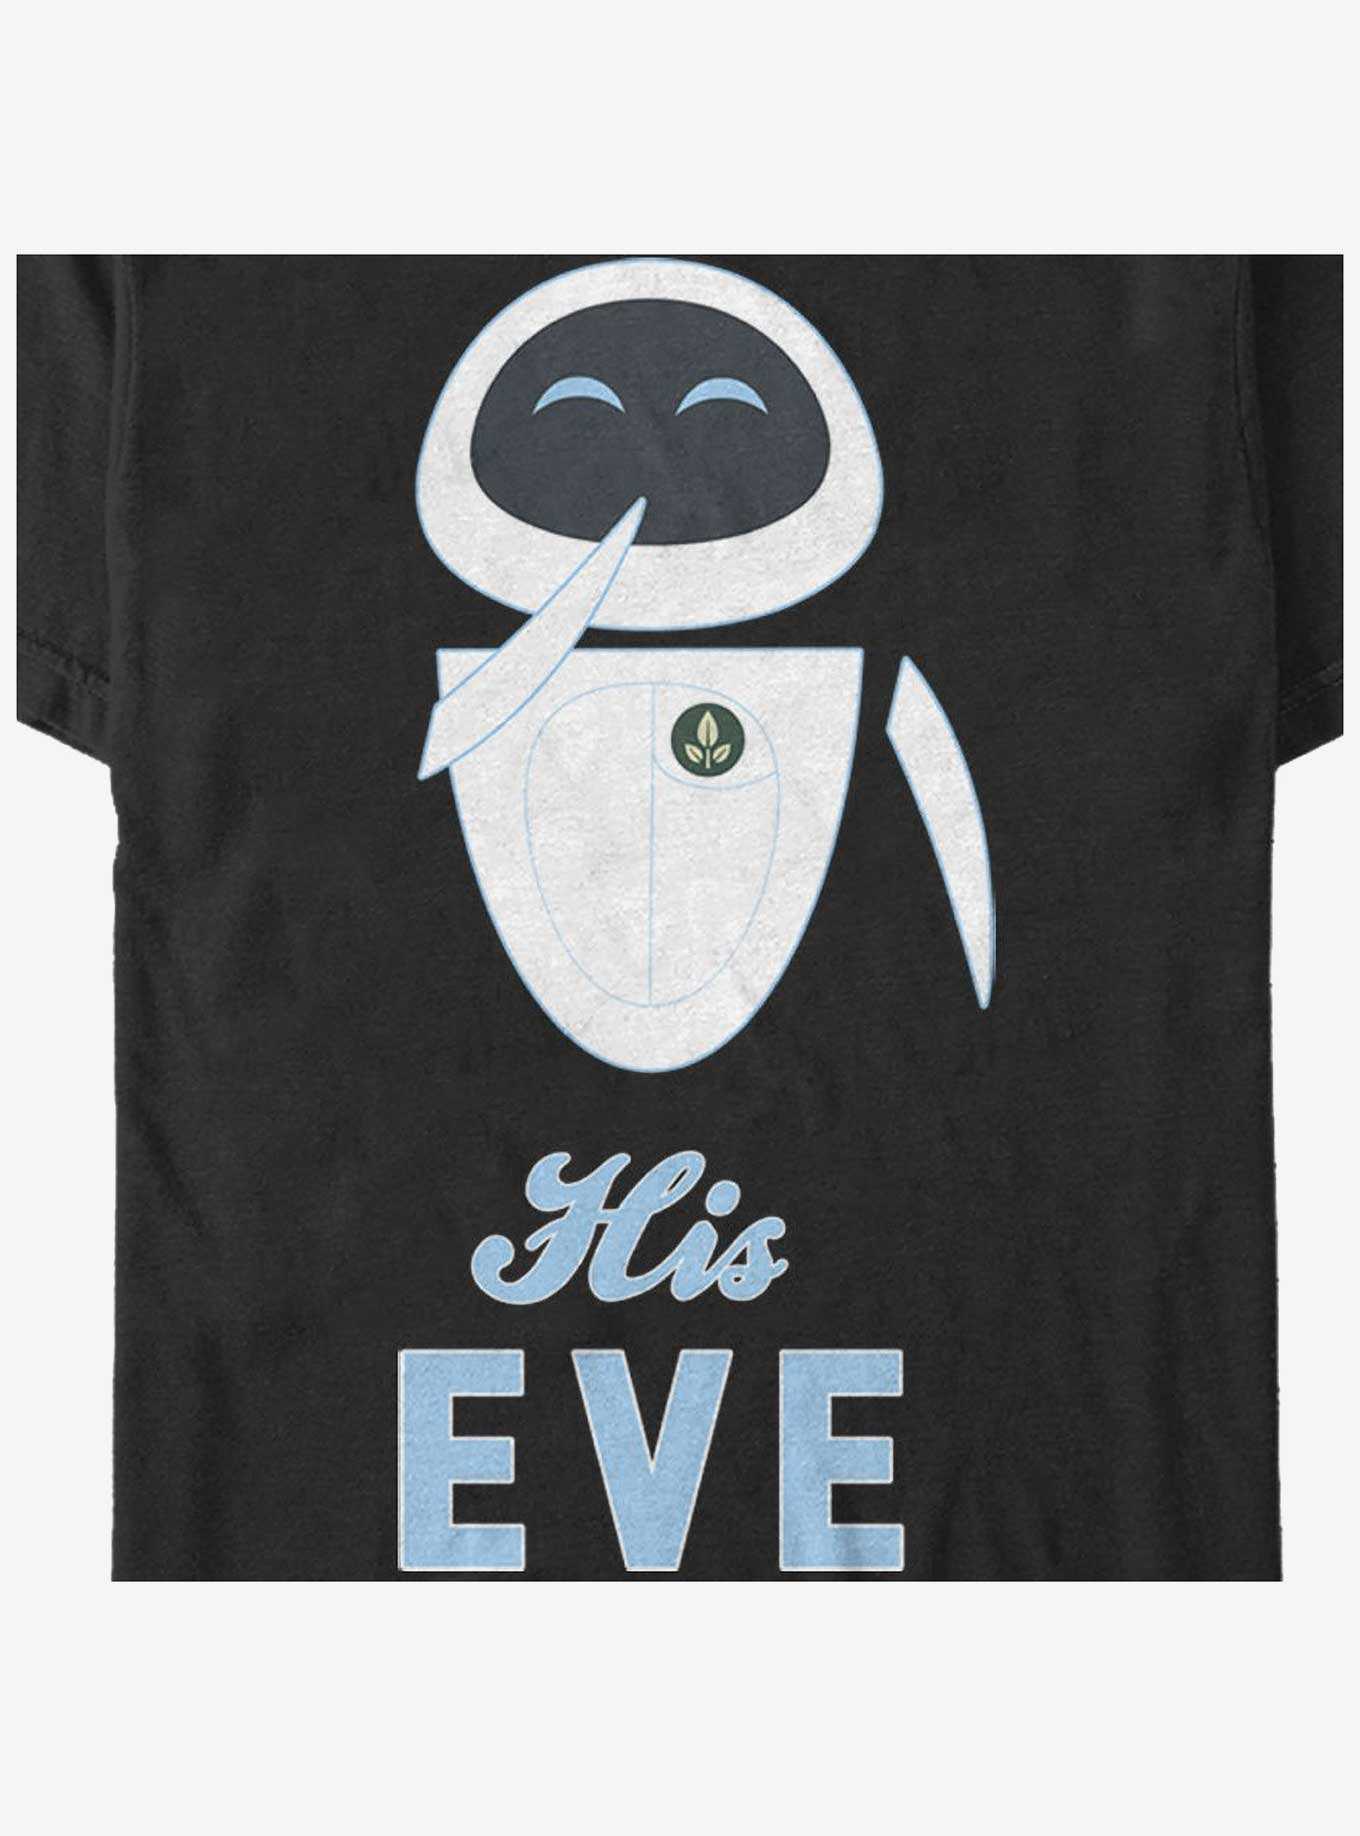 Disney Pixar WALL-E His Eve Youth Girls T-Shirt, , hi-res